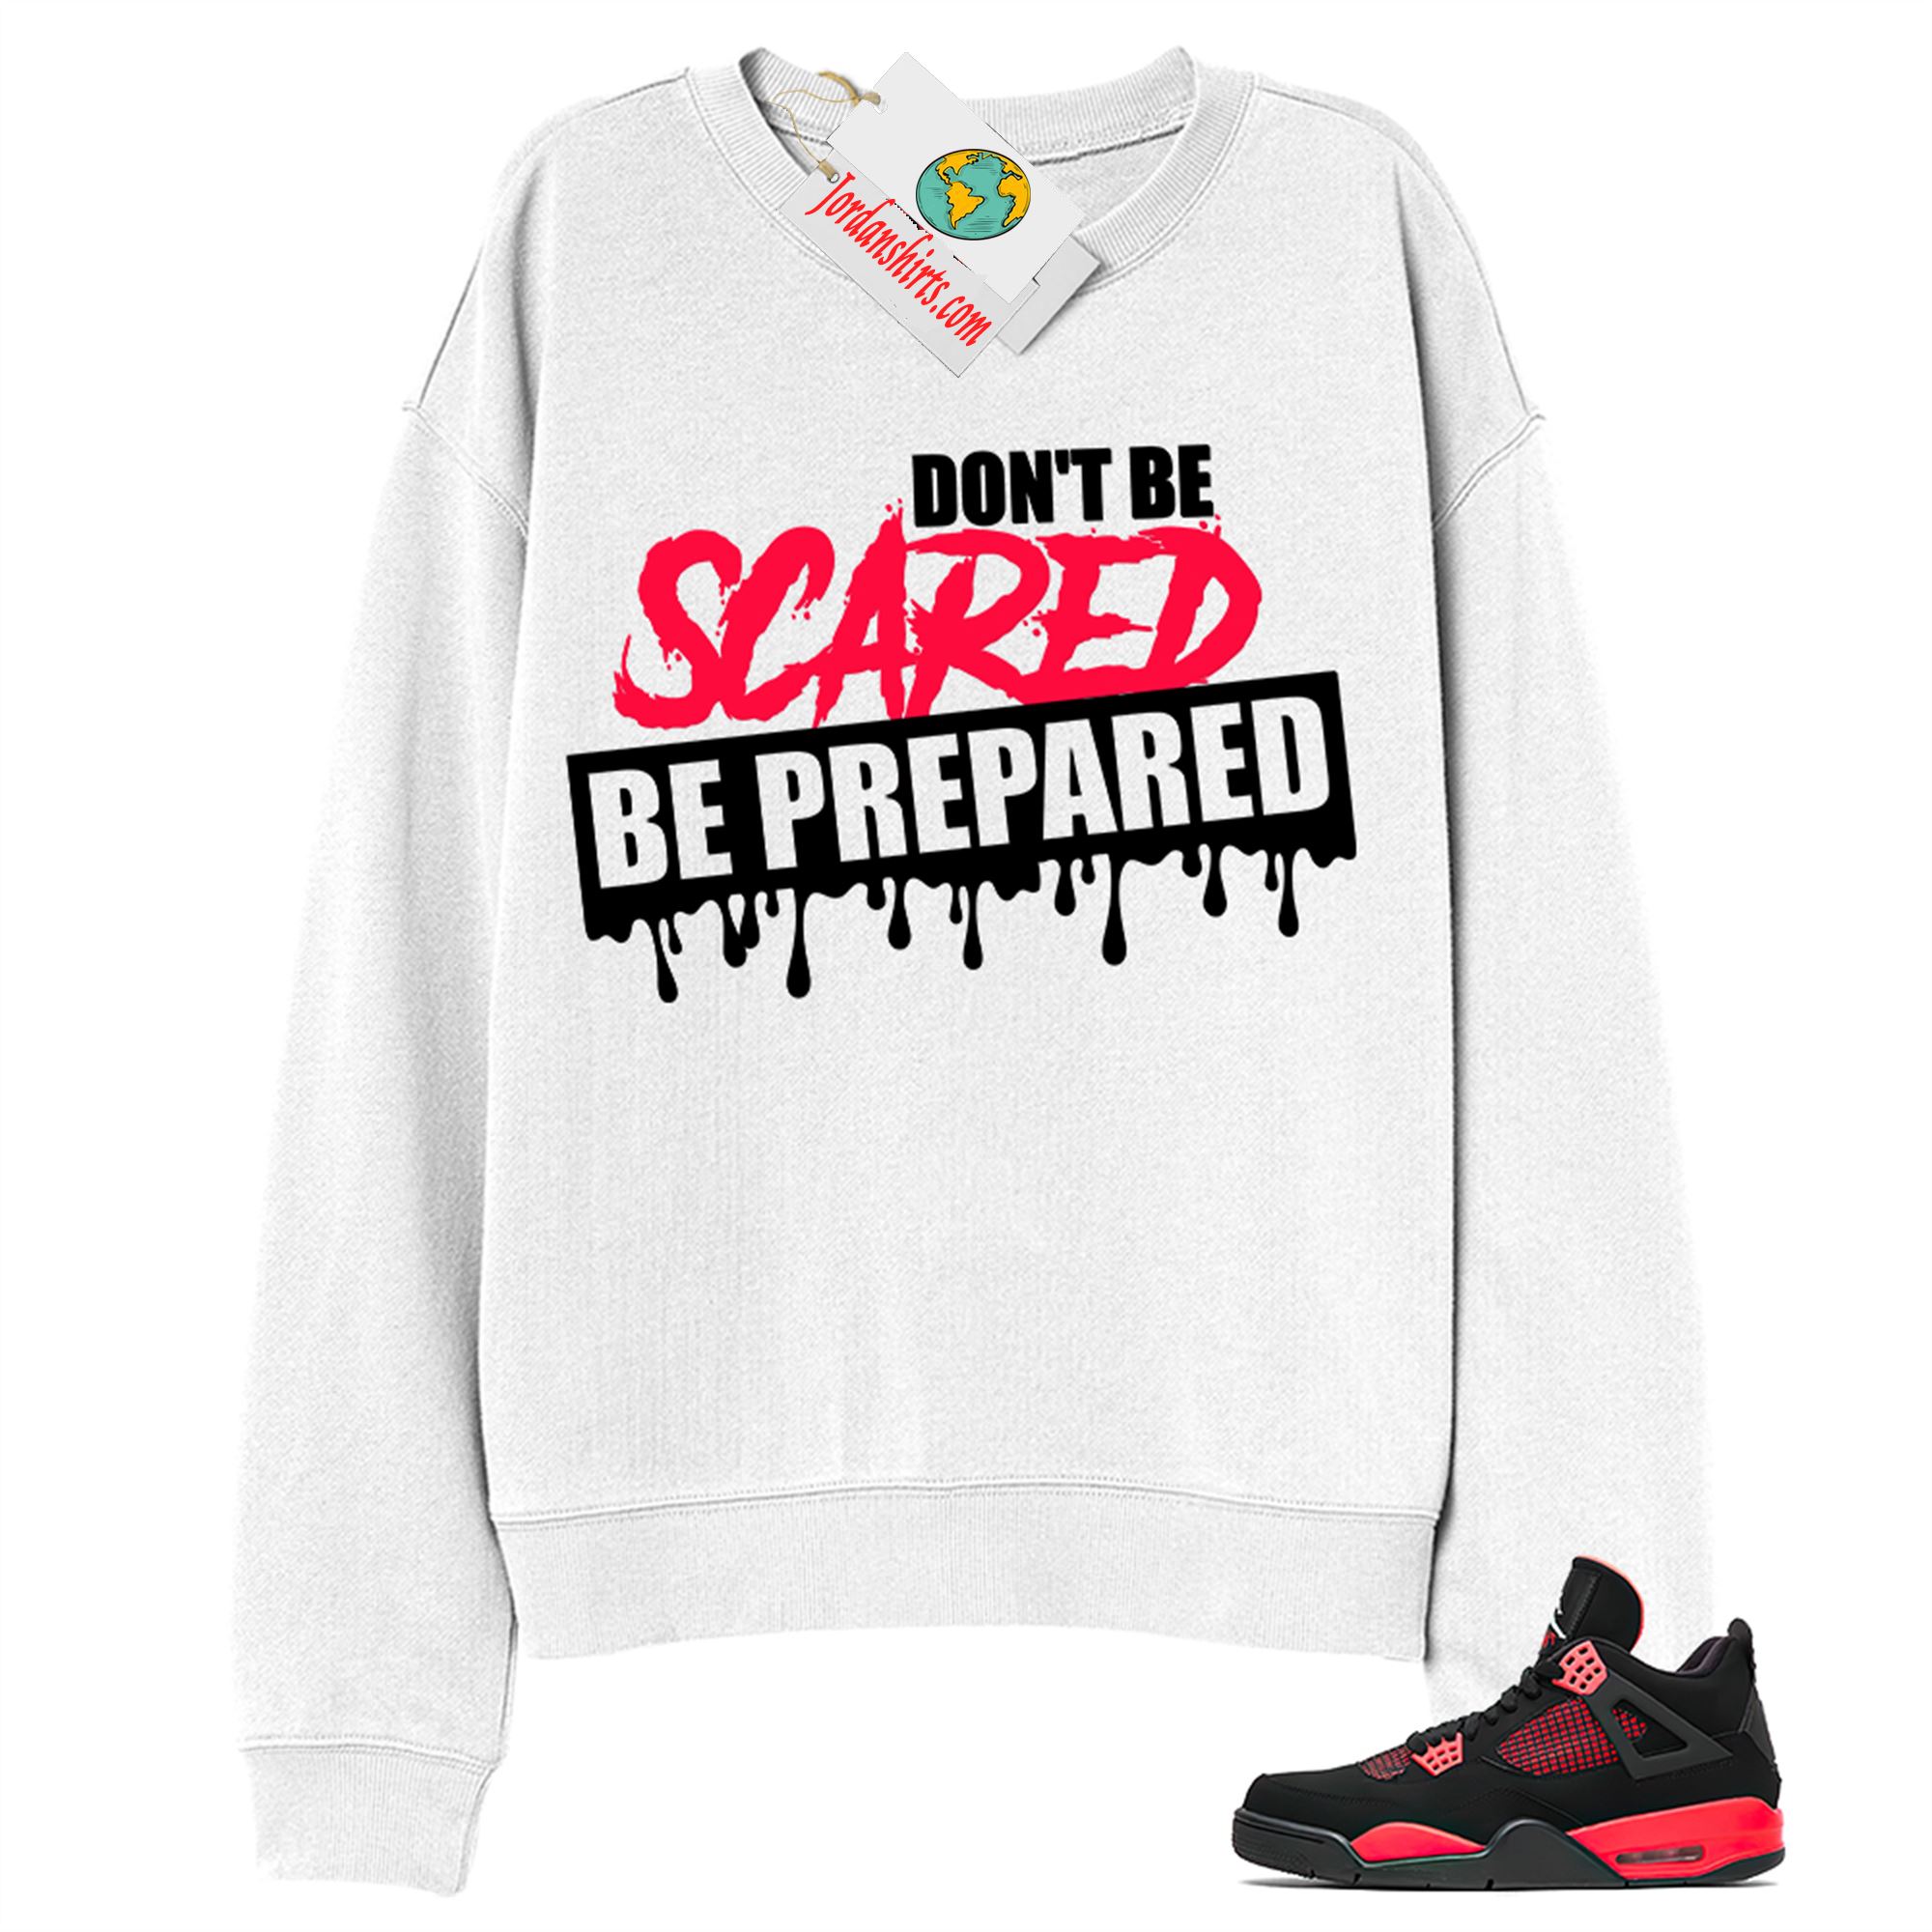 Jordan 4 Sweatshirt, Dont Be Scared Be Prepared White Sweatshirt Air Jordan 4 Red Thunder 4s Size Up To 5xl